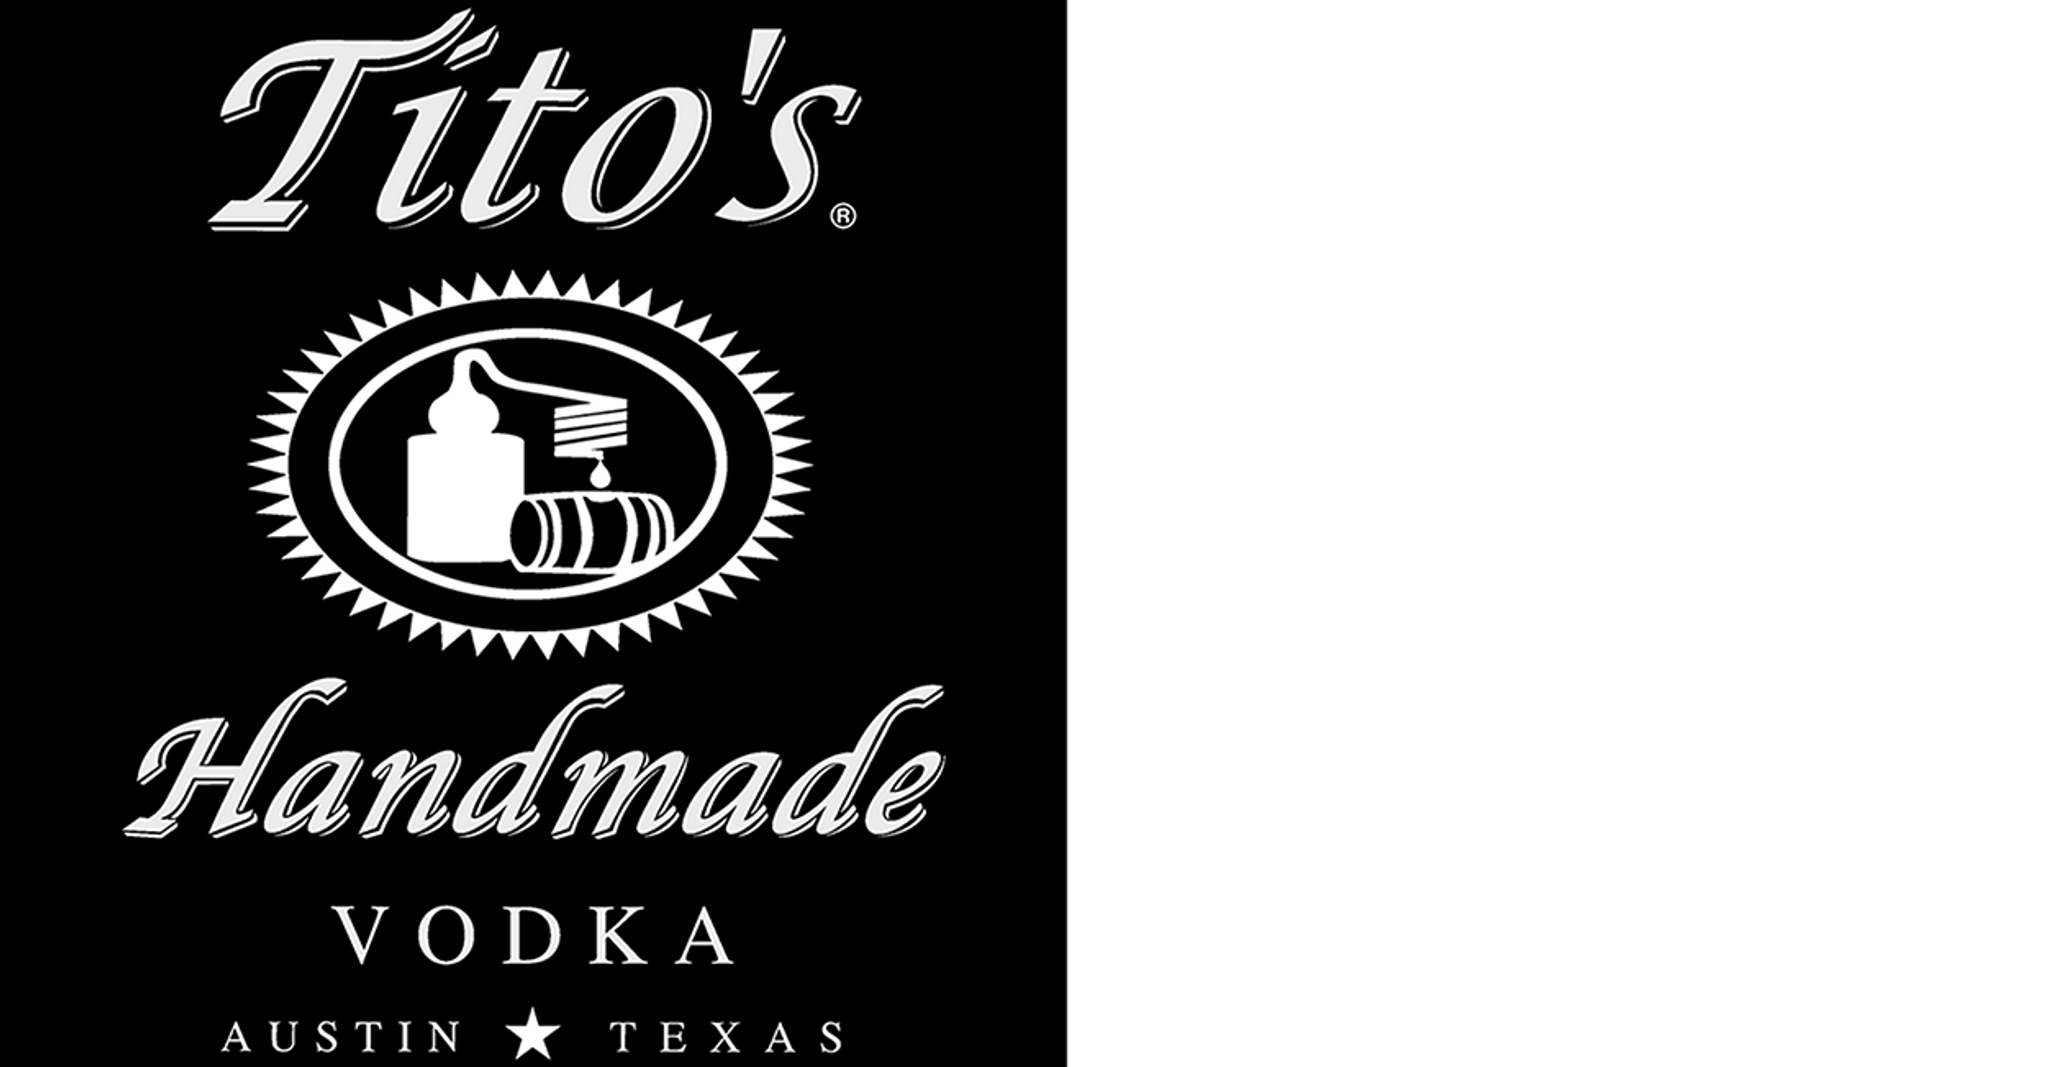 The Tito's company logo which reads Tito's Handmade Vodka on a black background